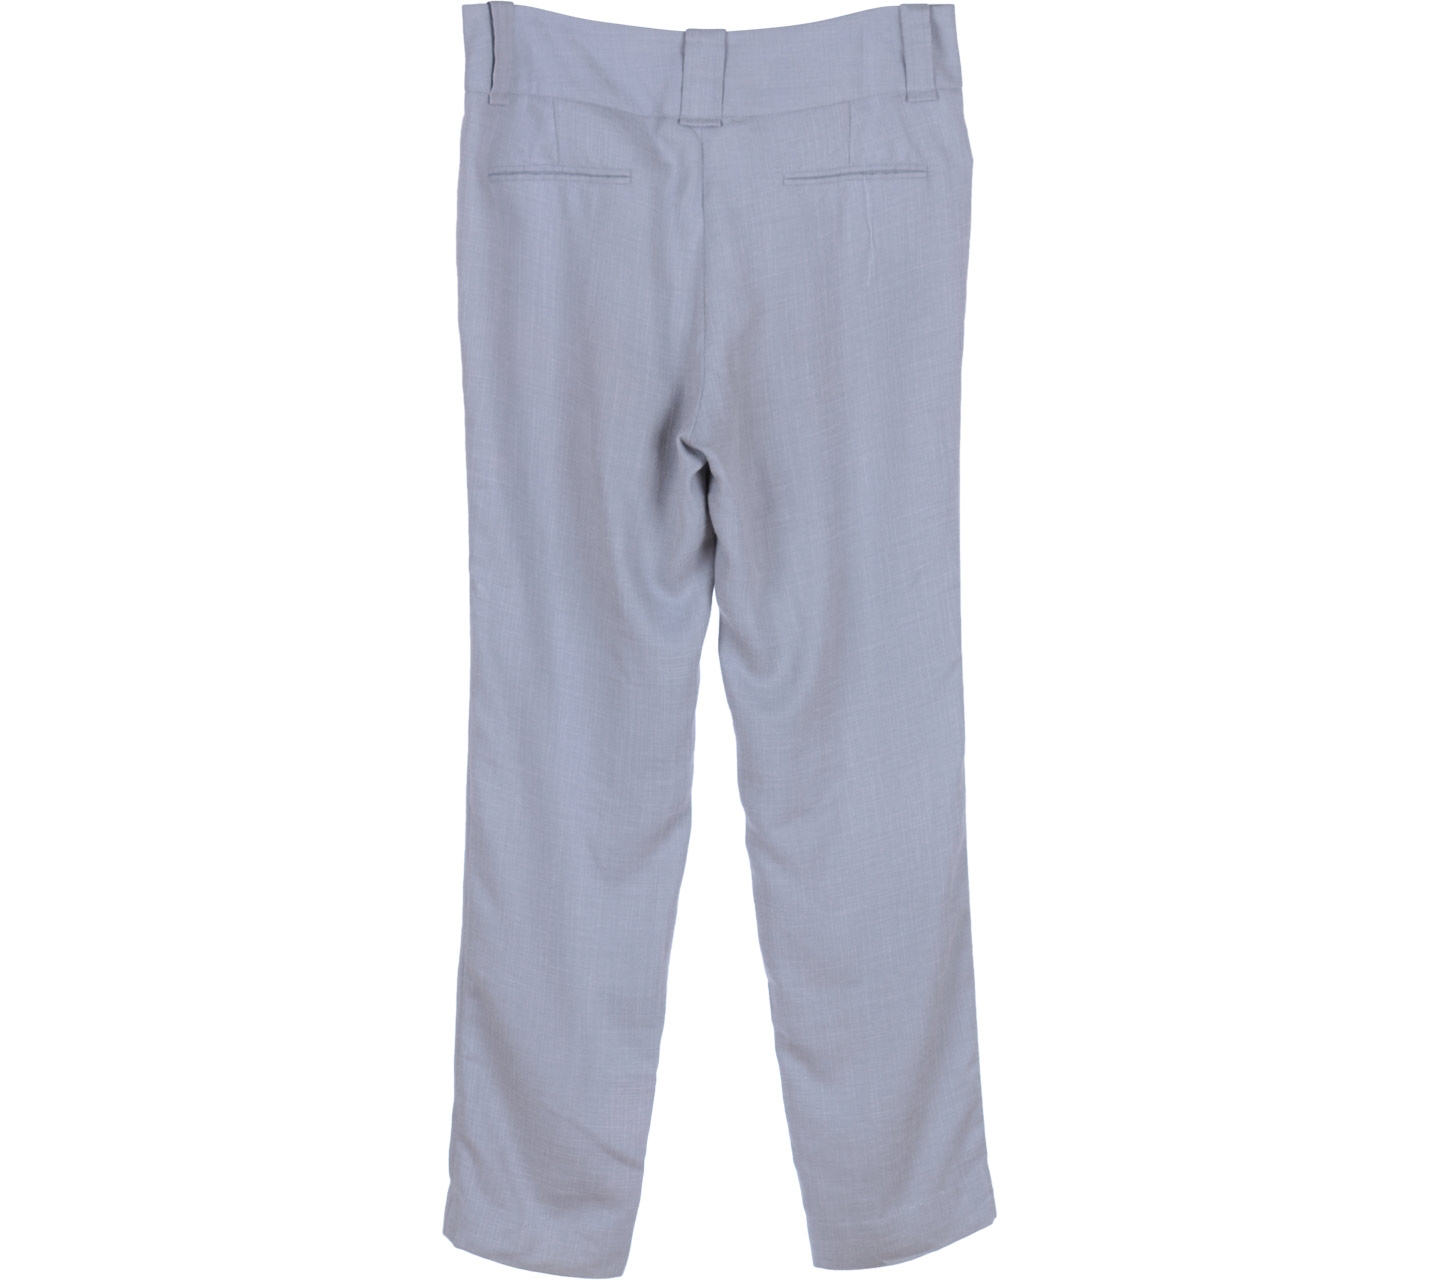 Lustre Grey Pants